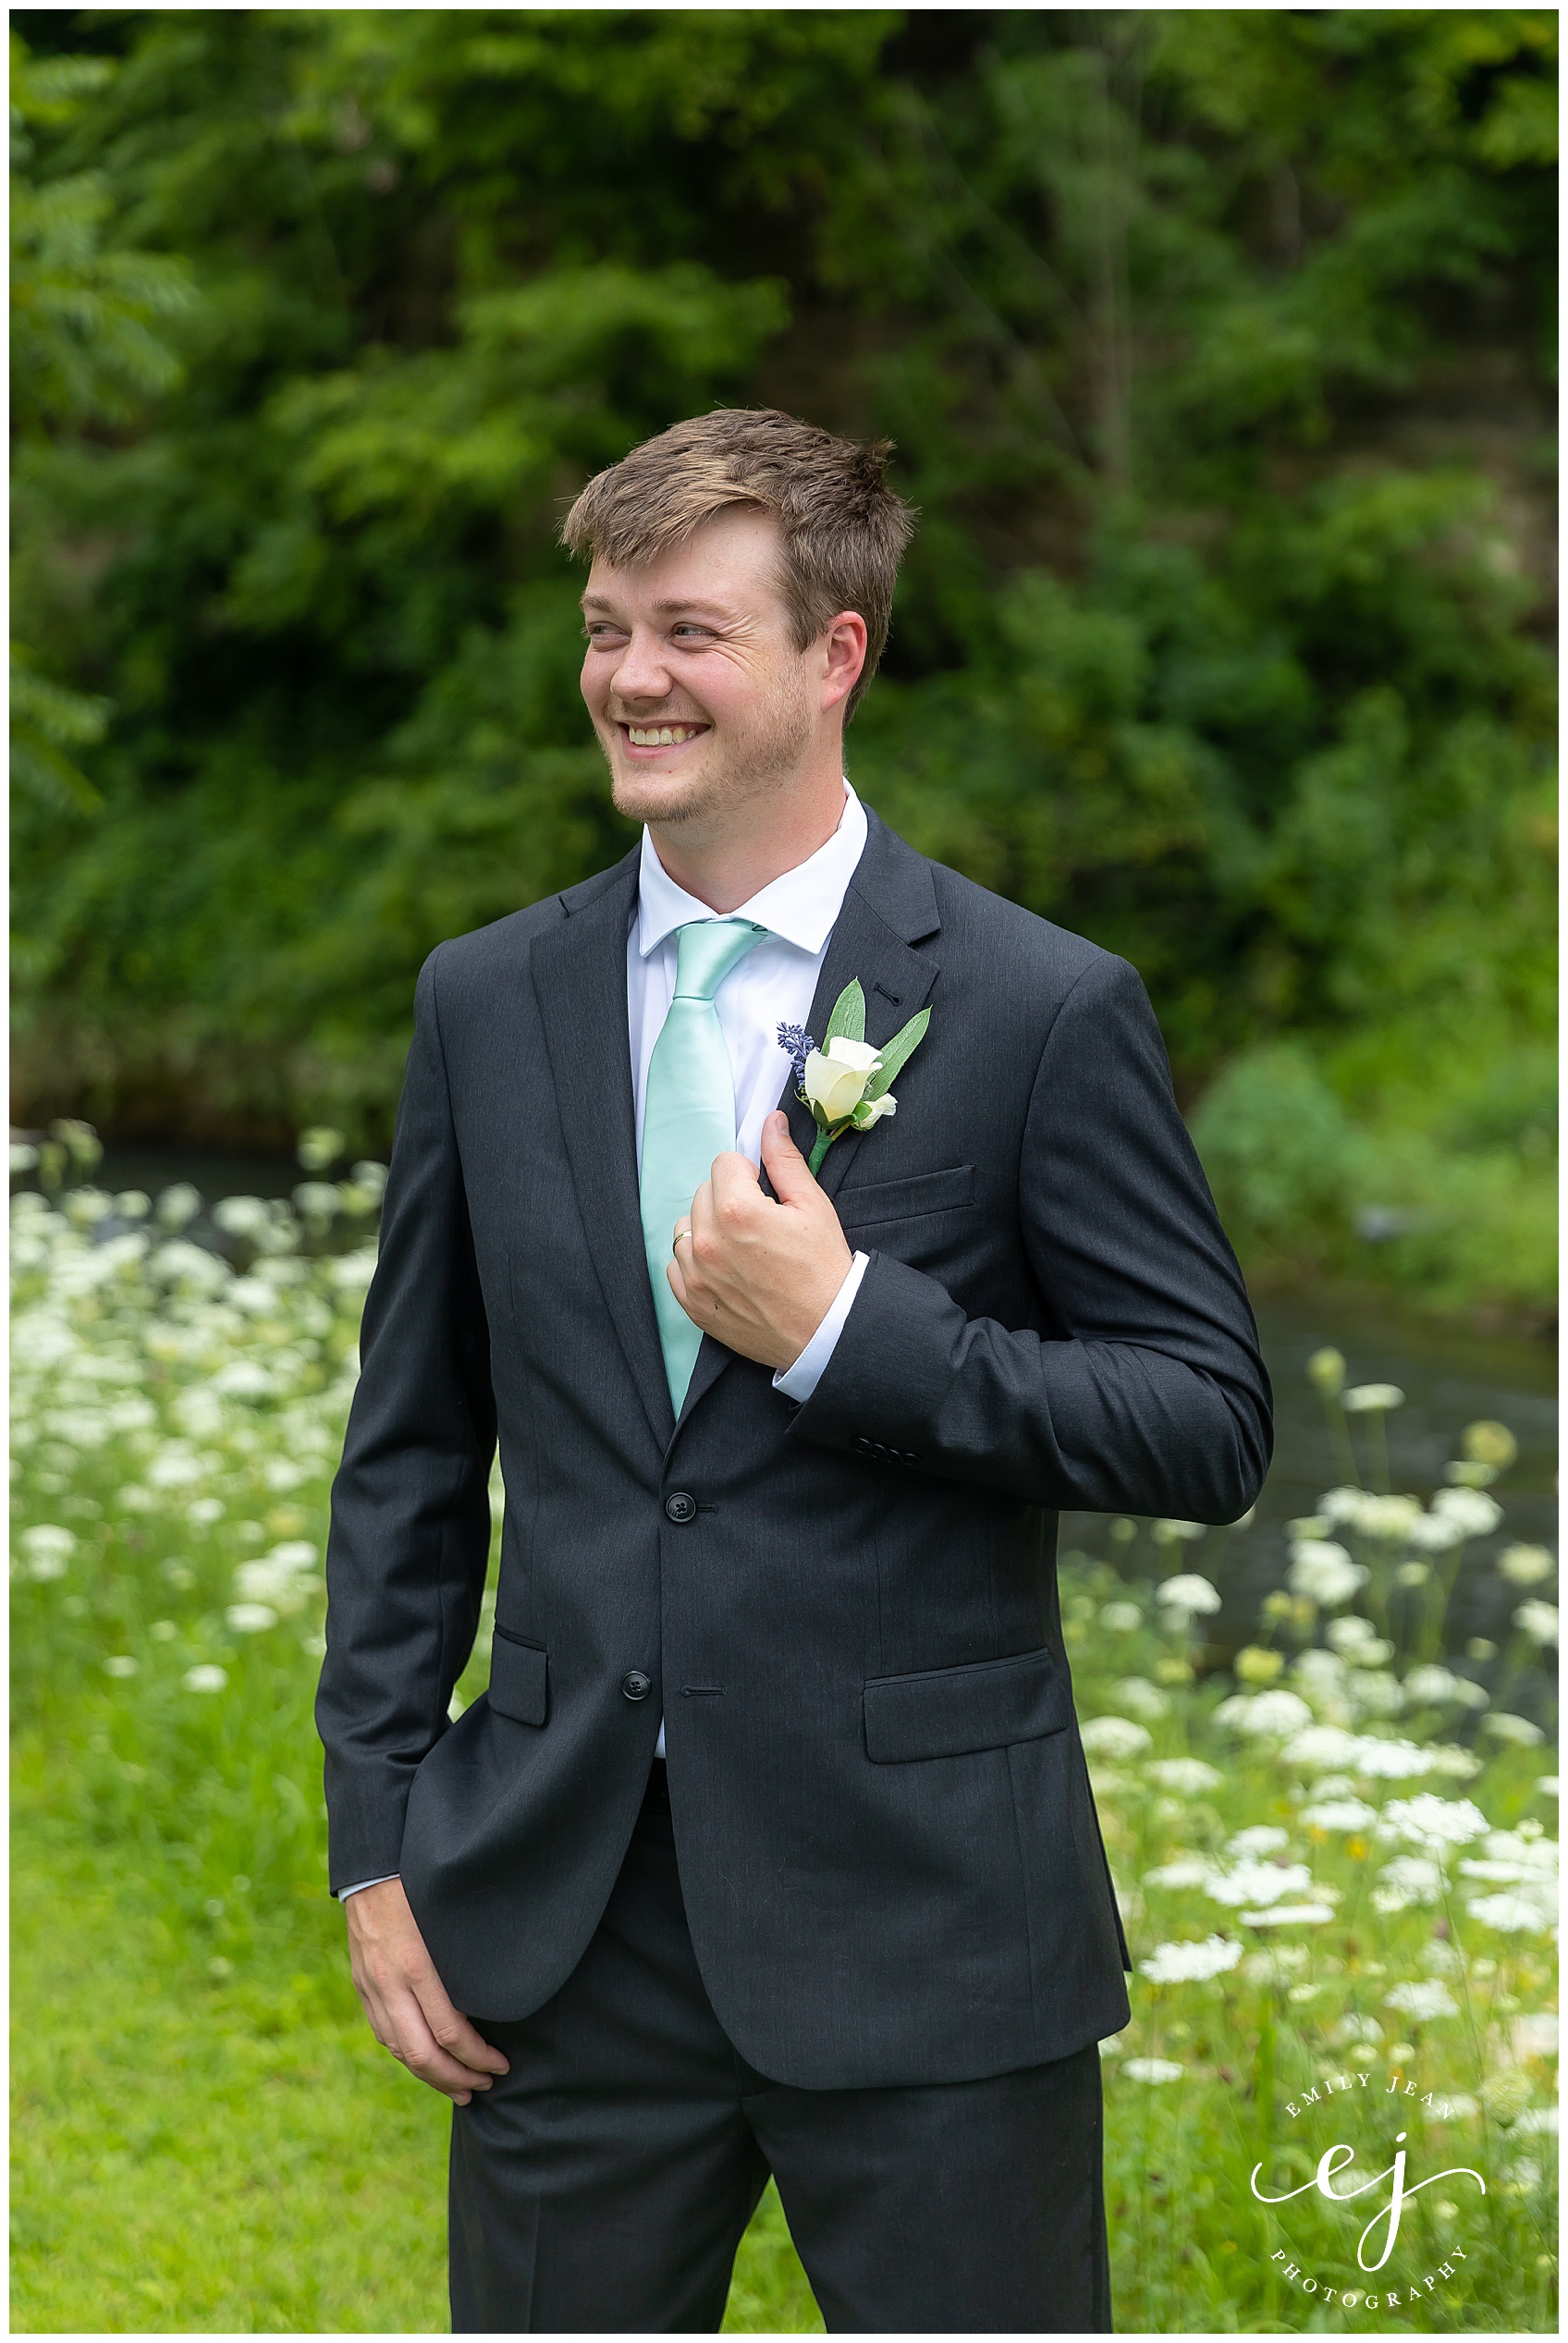 groom smiling wearing blue tie and grey suit